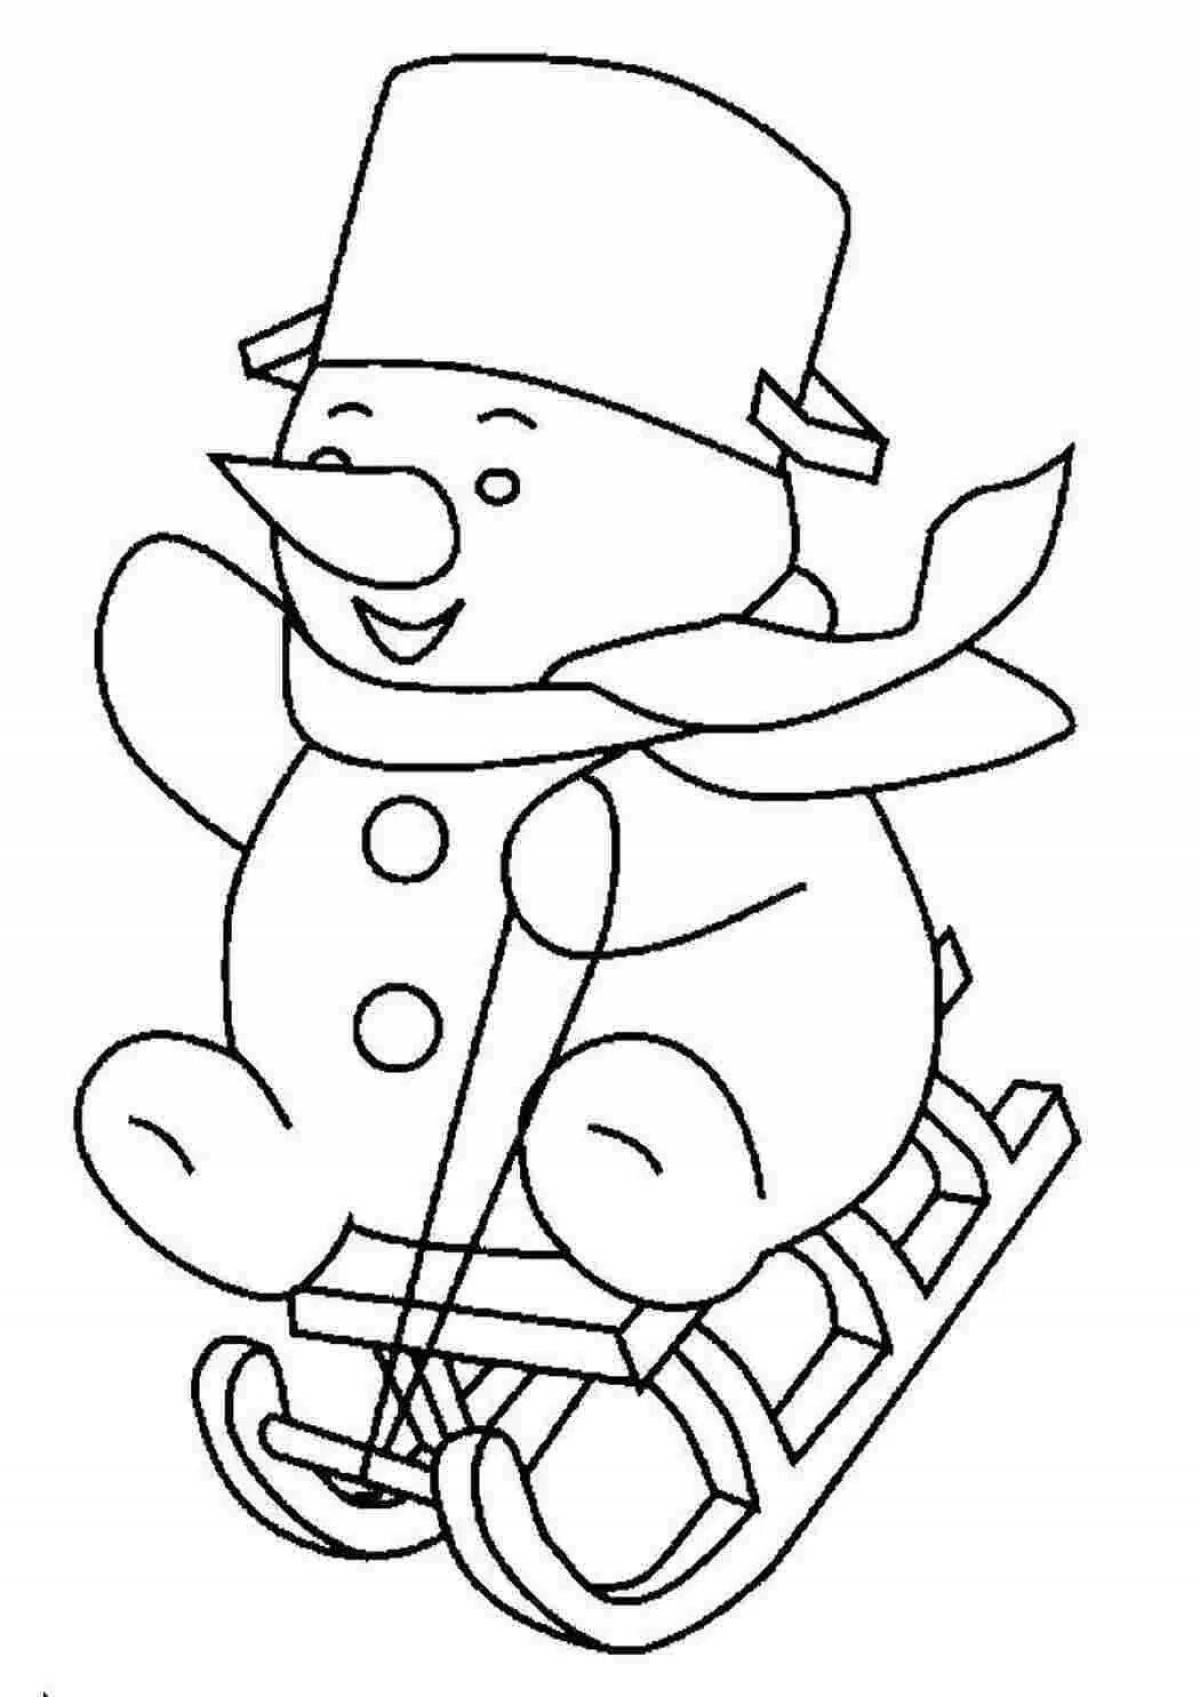 Joyful coloring of a snowman on skates for children